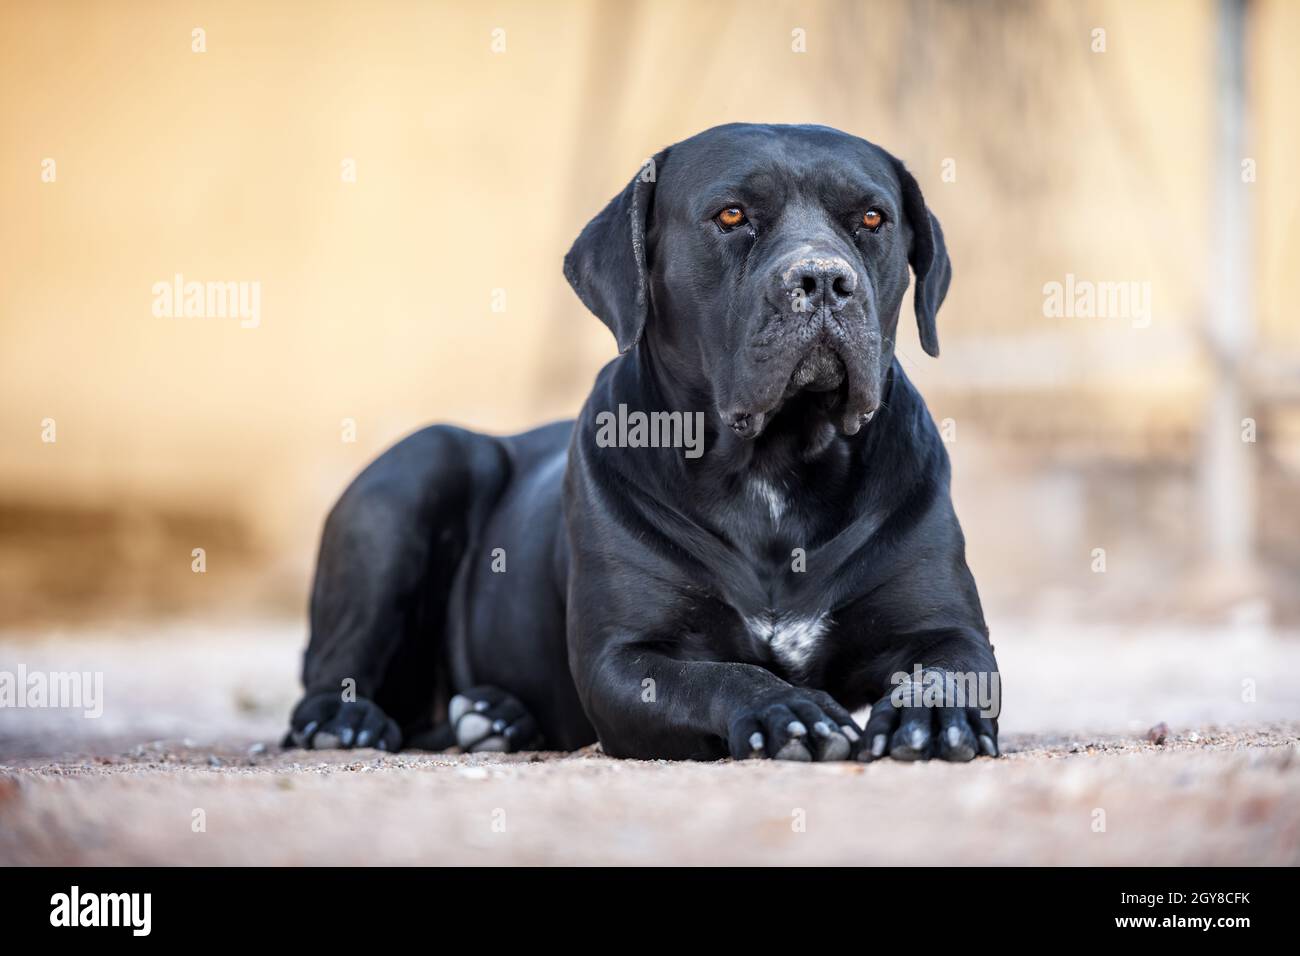 Black dog breed Cane Corso lies on the ground. Animal photography Stock Photo